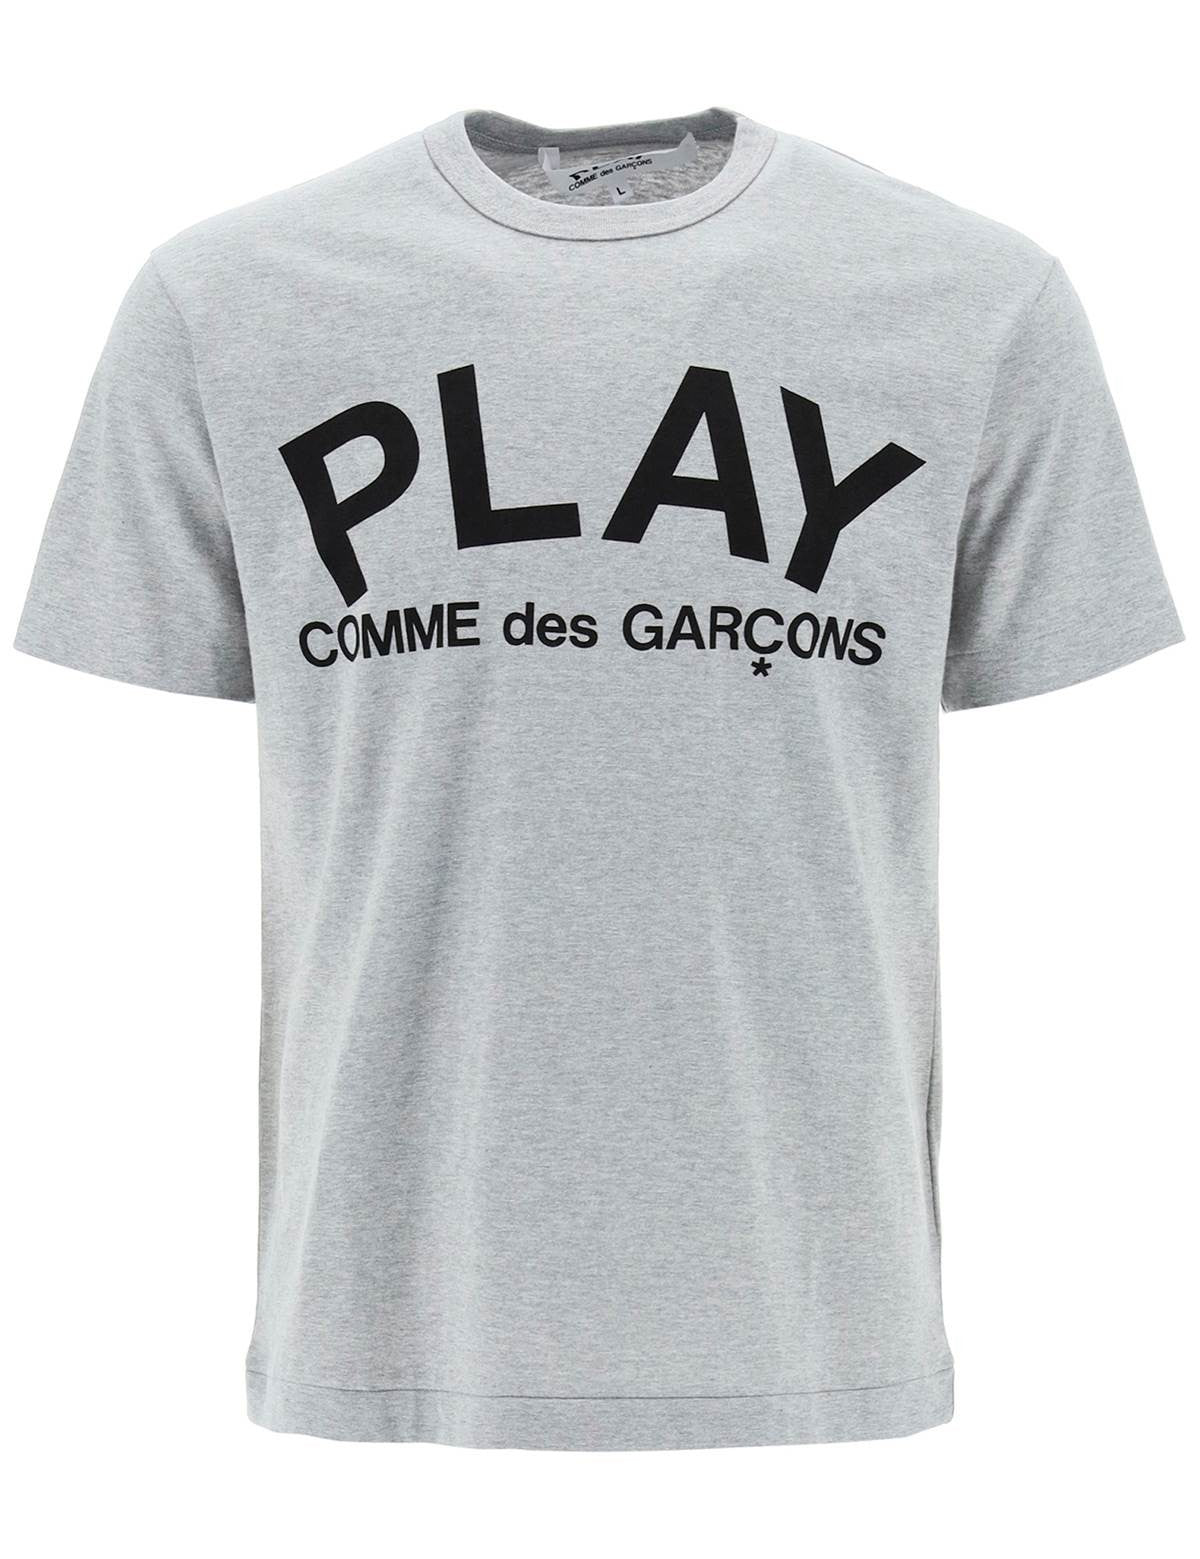 comme-des-garcons-play-t-shirt-with-play-print_019f45ac-b4f5-43a0-ae5b-721f55b460fa.jpg